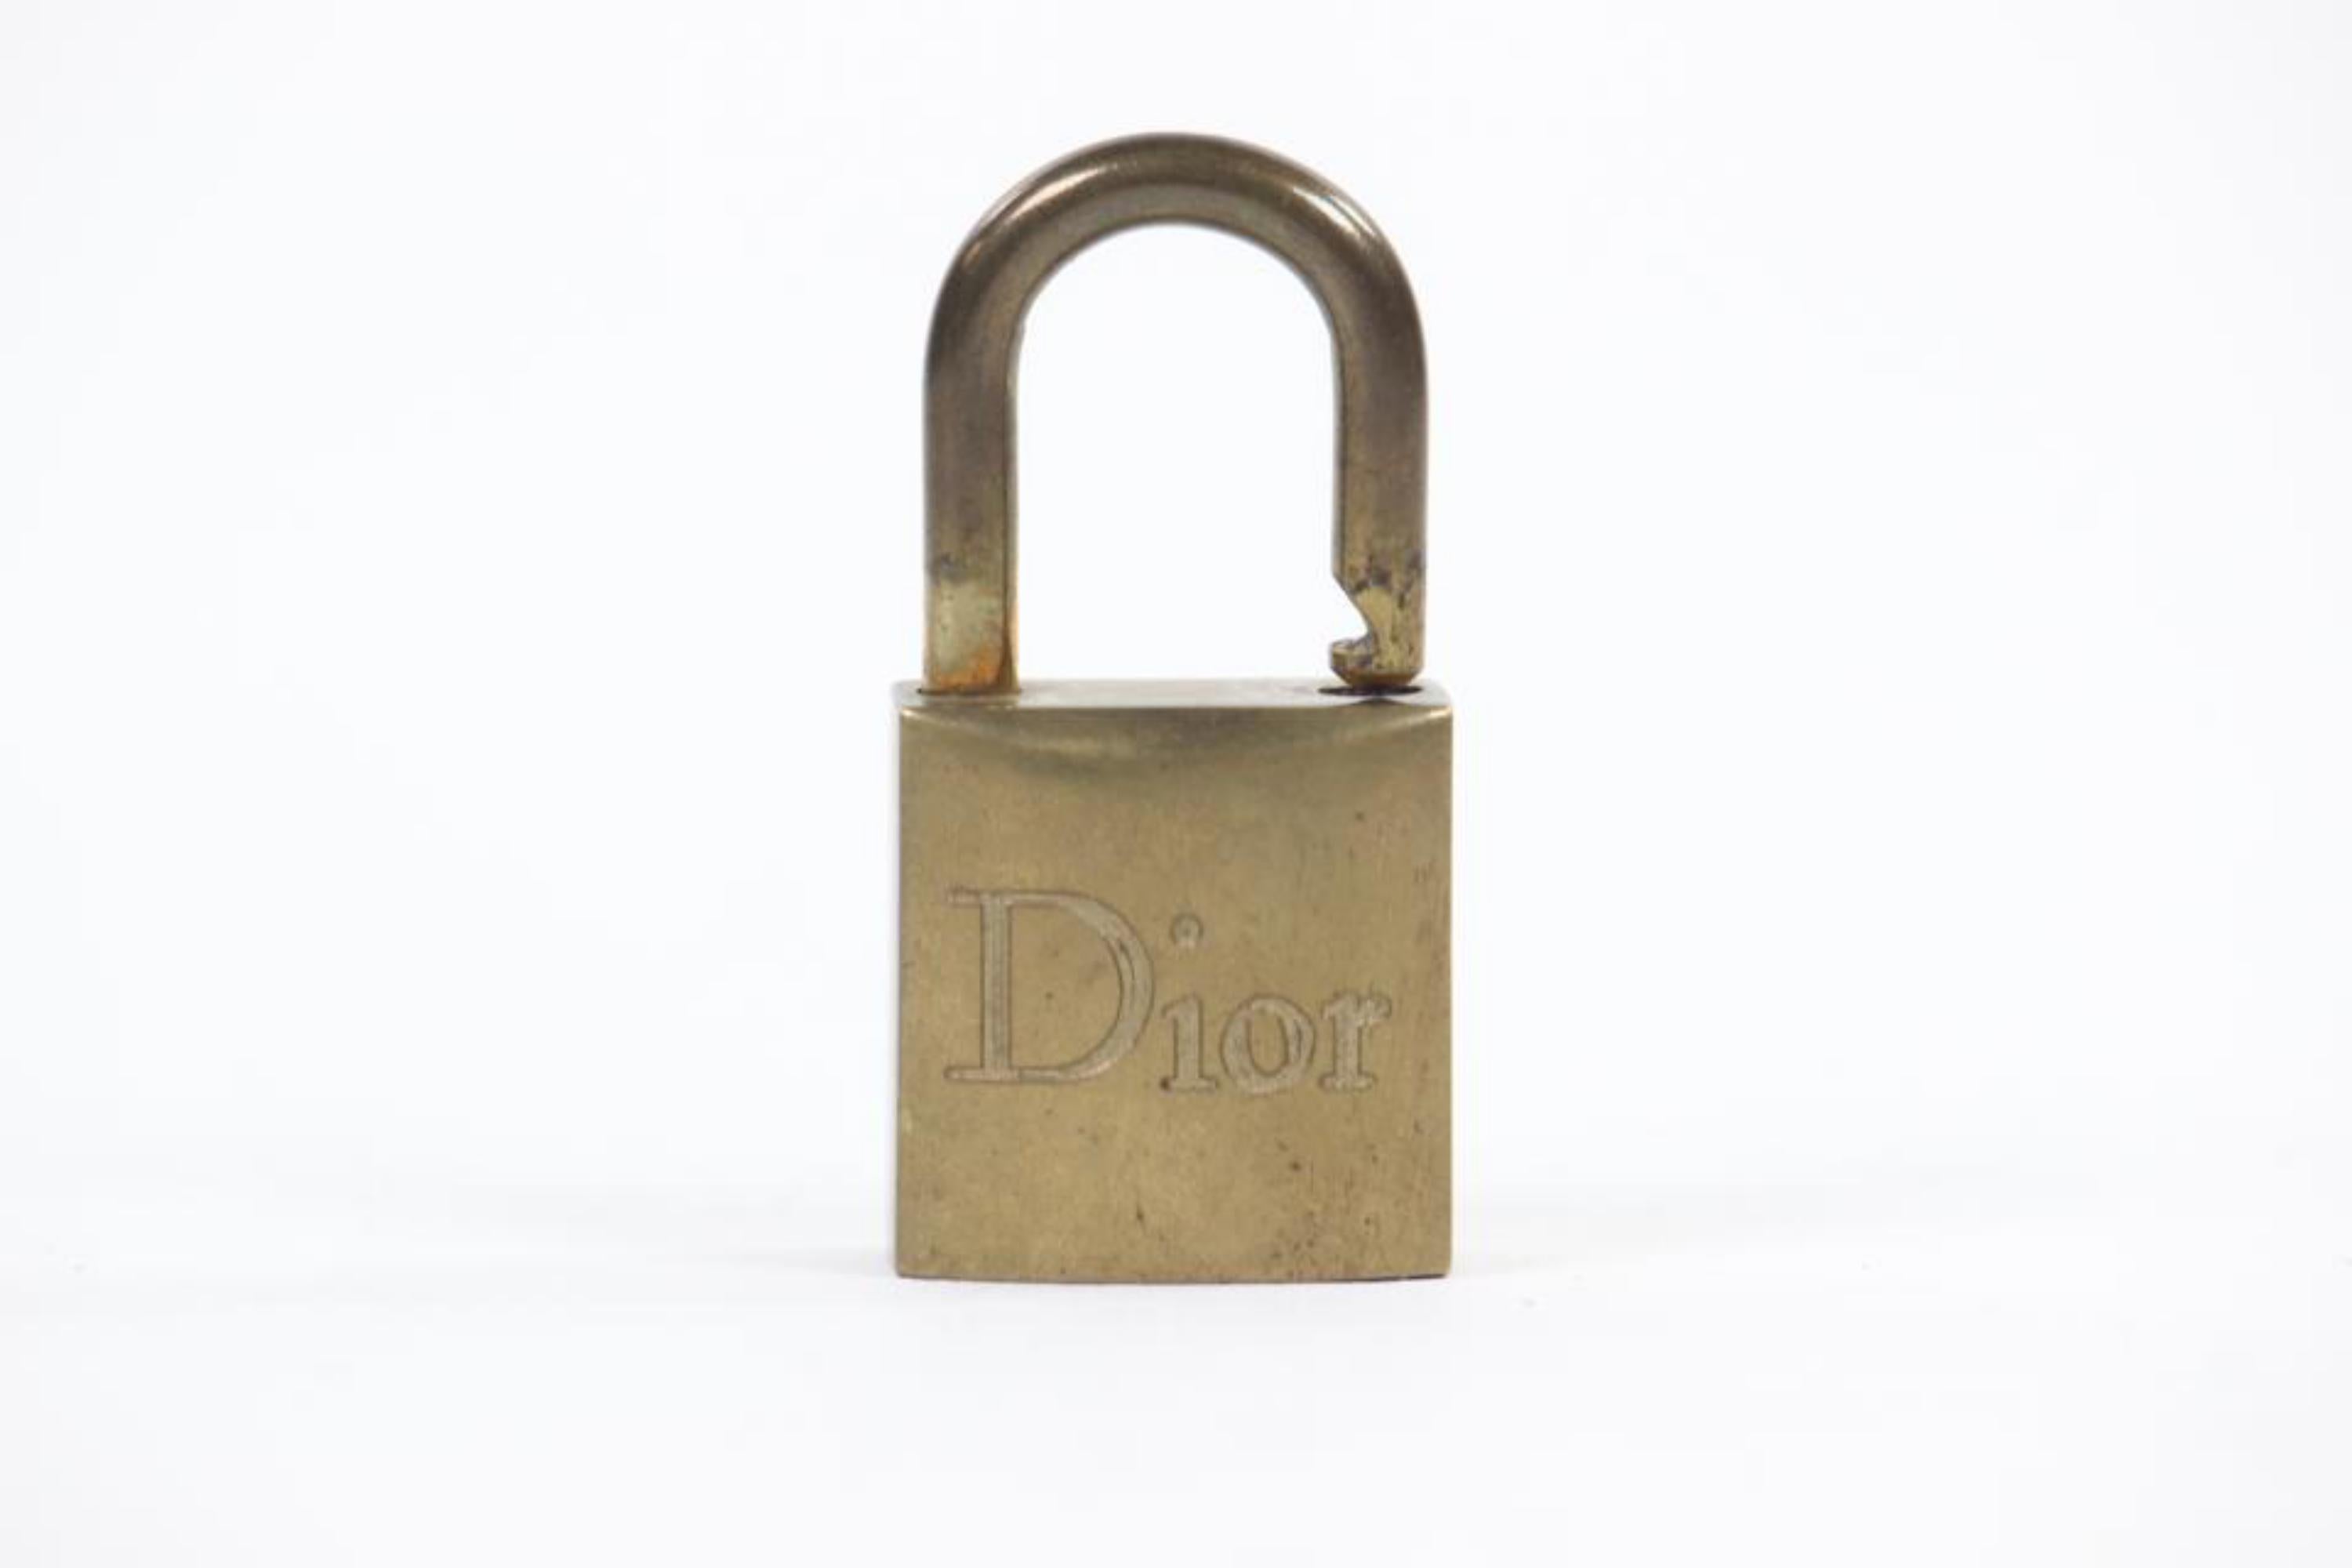 Dior Brass Logo Padlock and Key Bag Charm Lock Set 3DR1104 For Sale 2